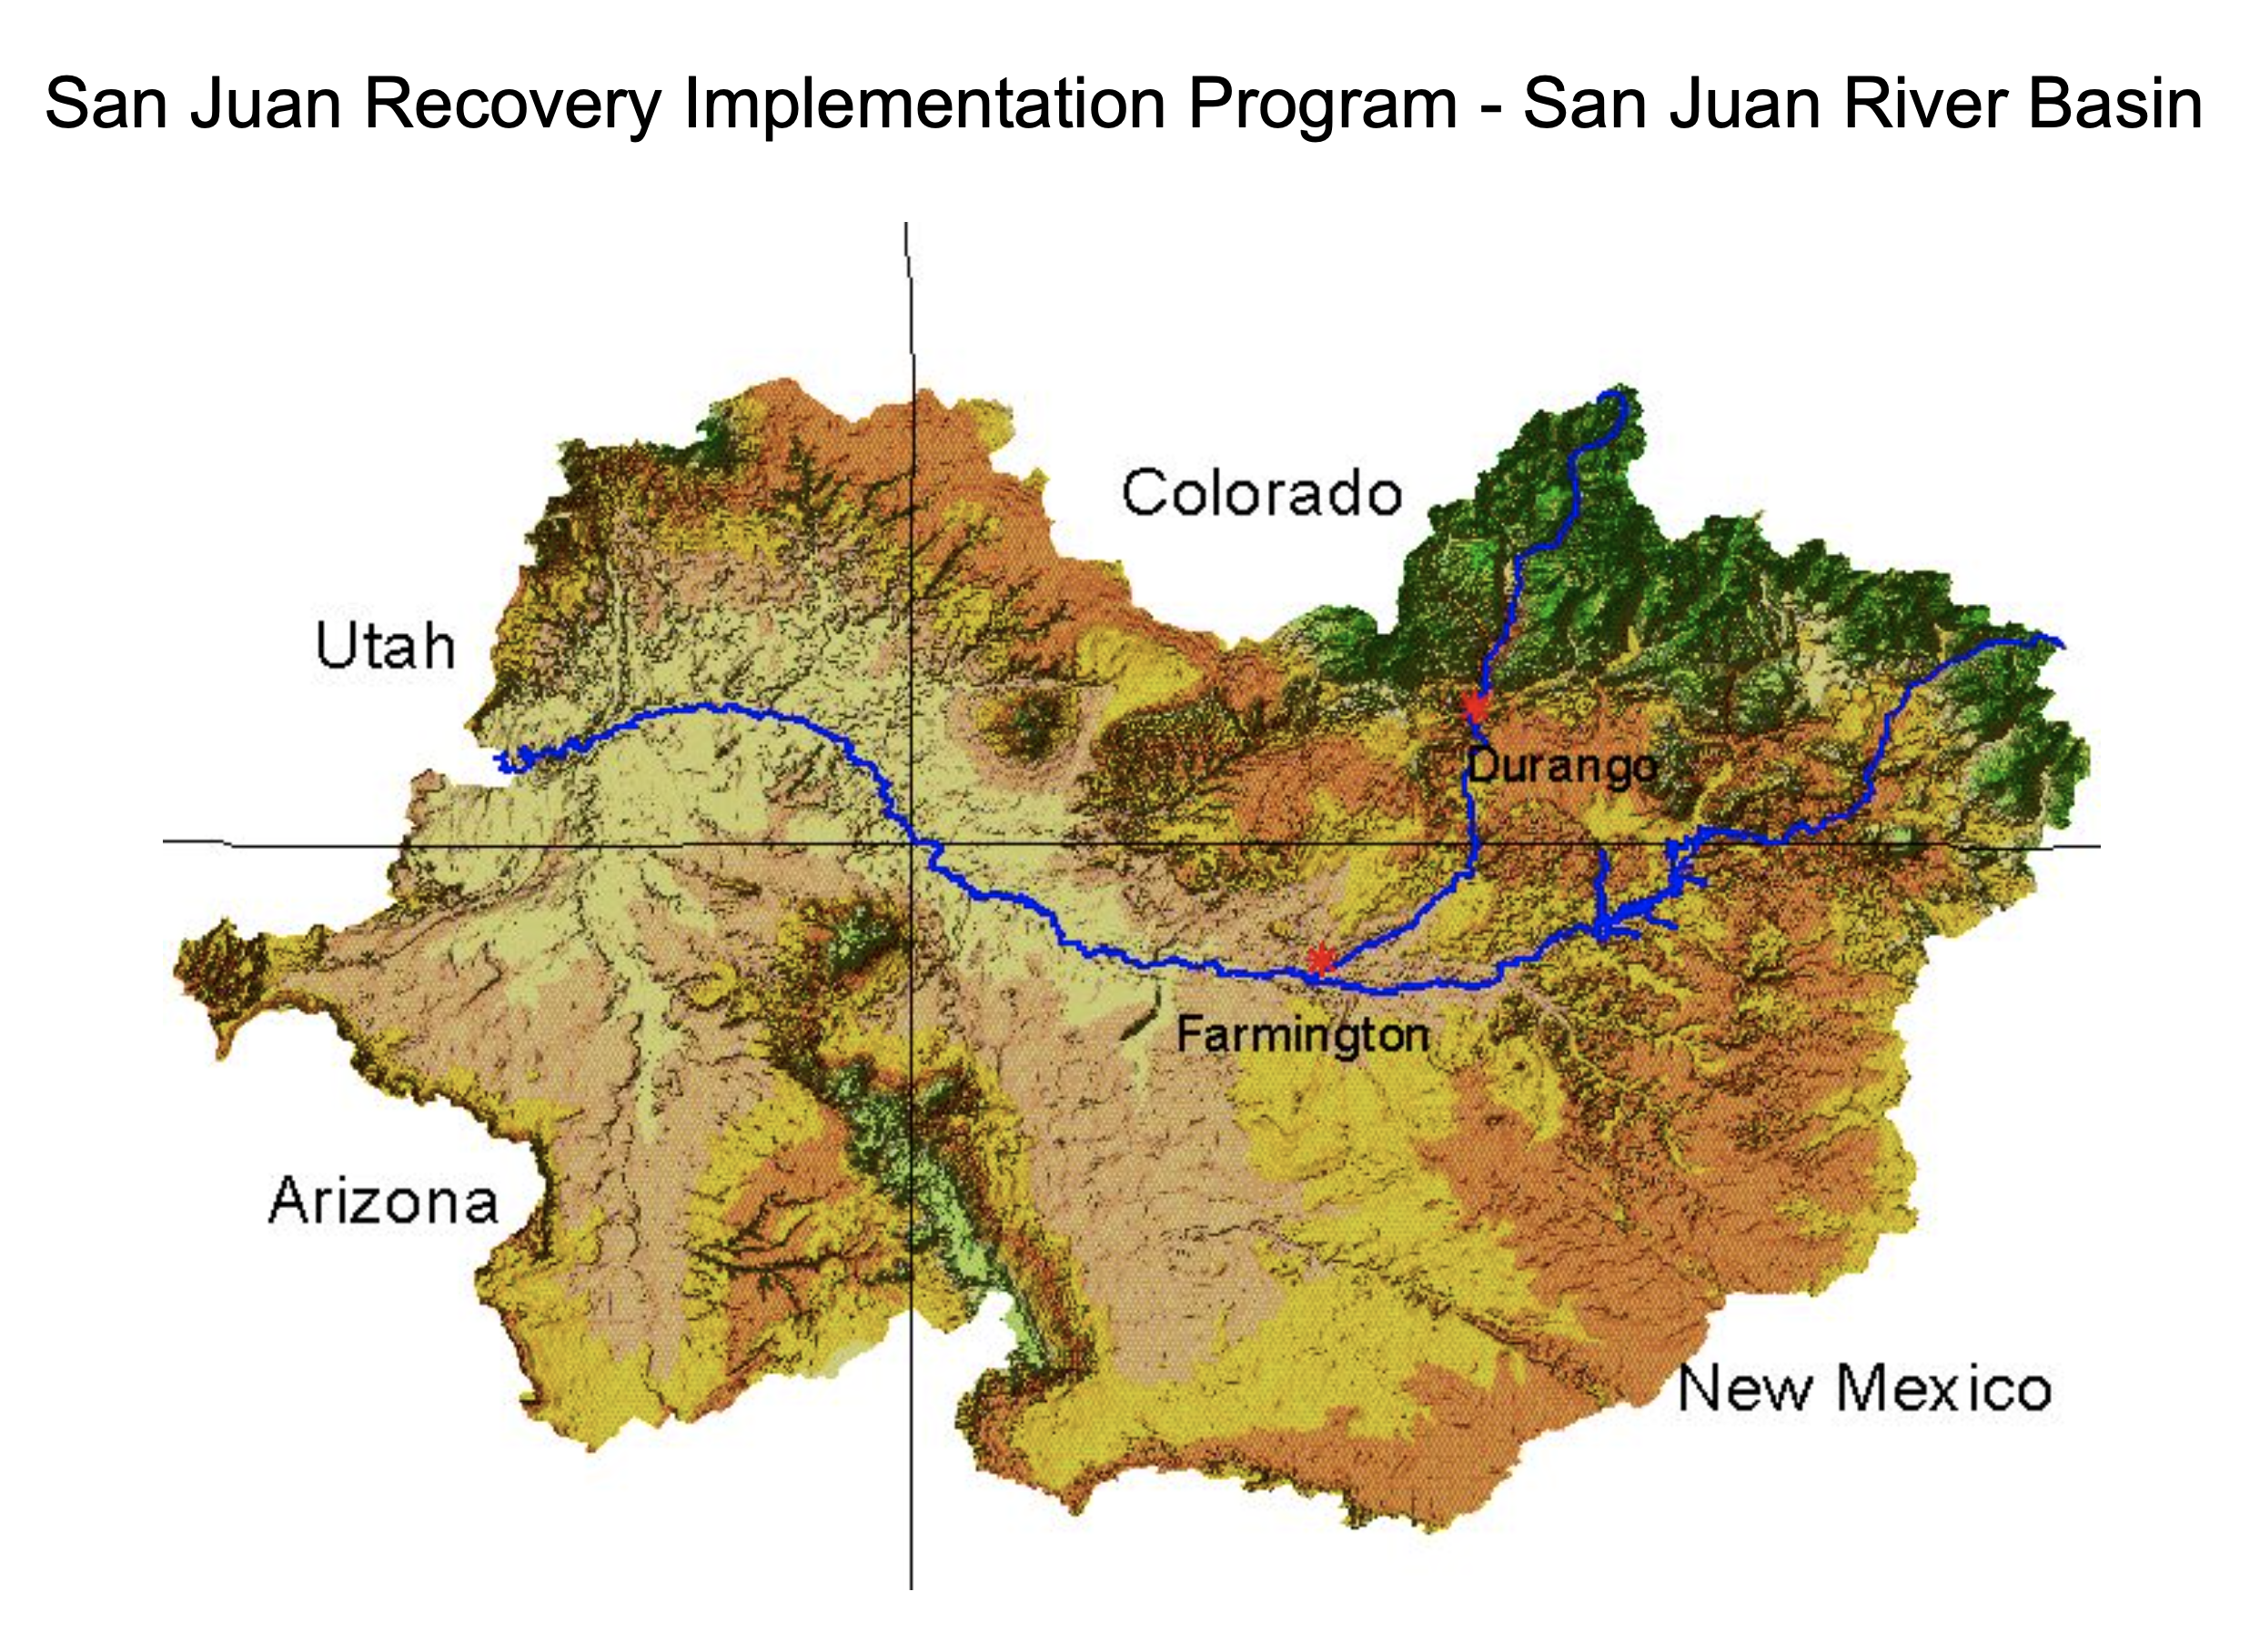 Navajo Dam operations update (September 22, 2022): Bumping down to 500 cfs #SanJuanRiver #ColoradoRiver #COriver #aridification